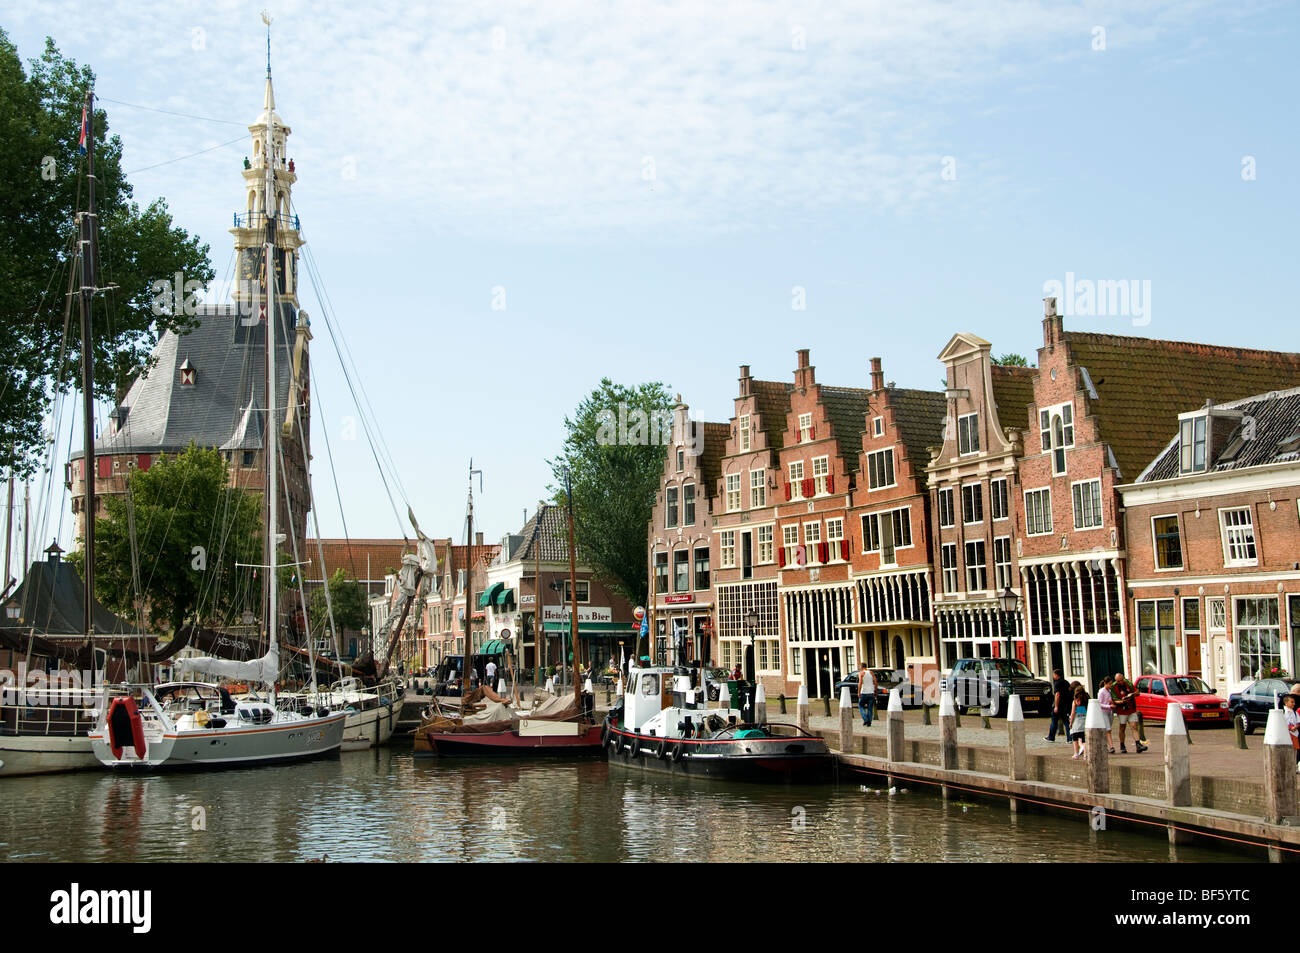 Hoorn paesi Bassi Olanda porto storico porto VOC Foto stock - Alamy